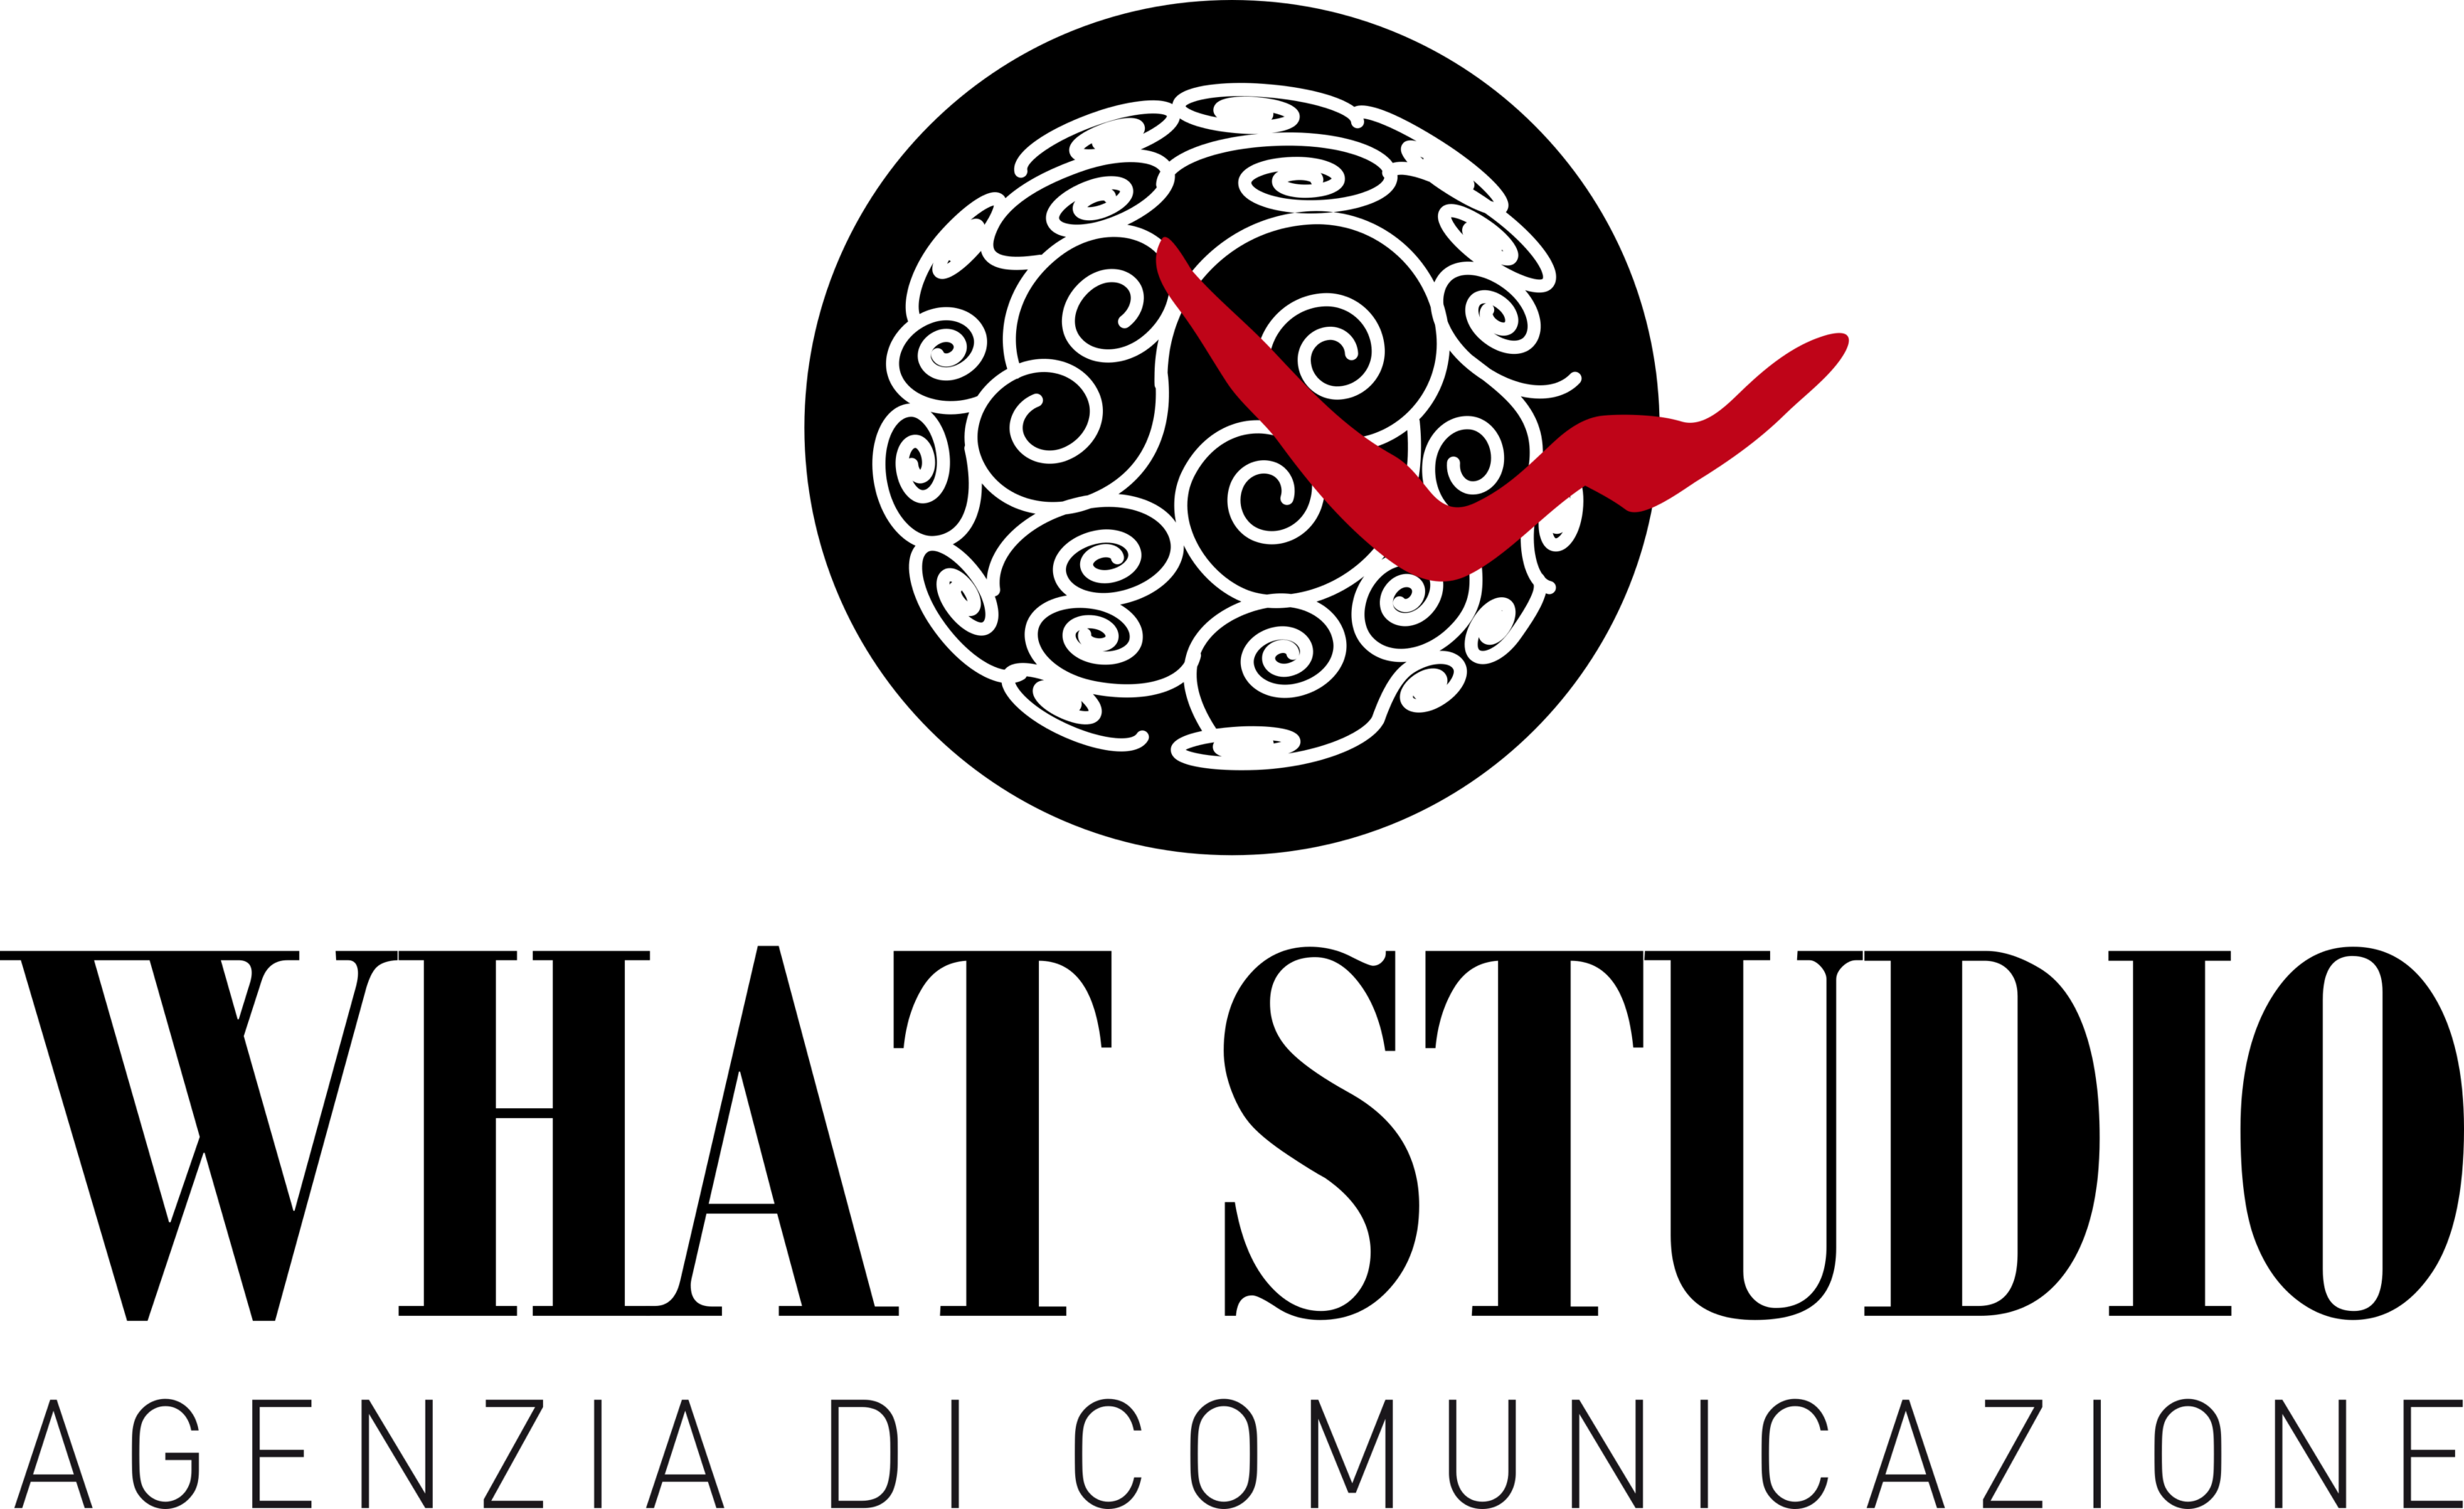 What Studio Communication Logo